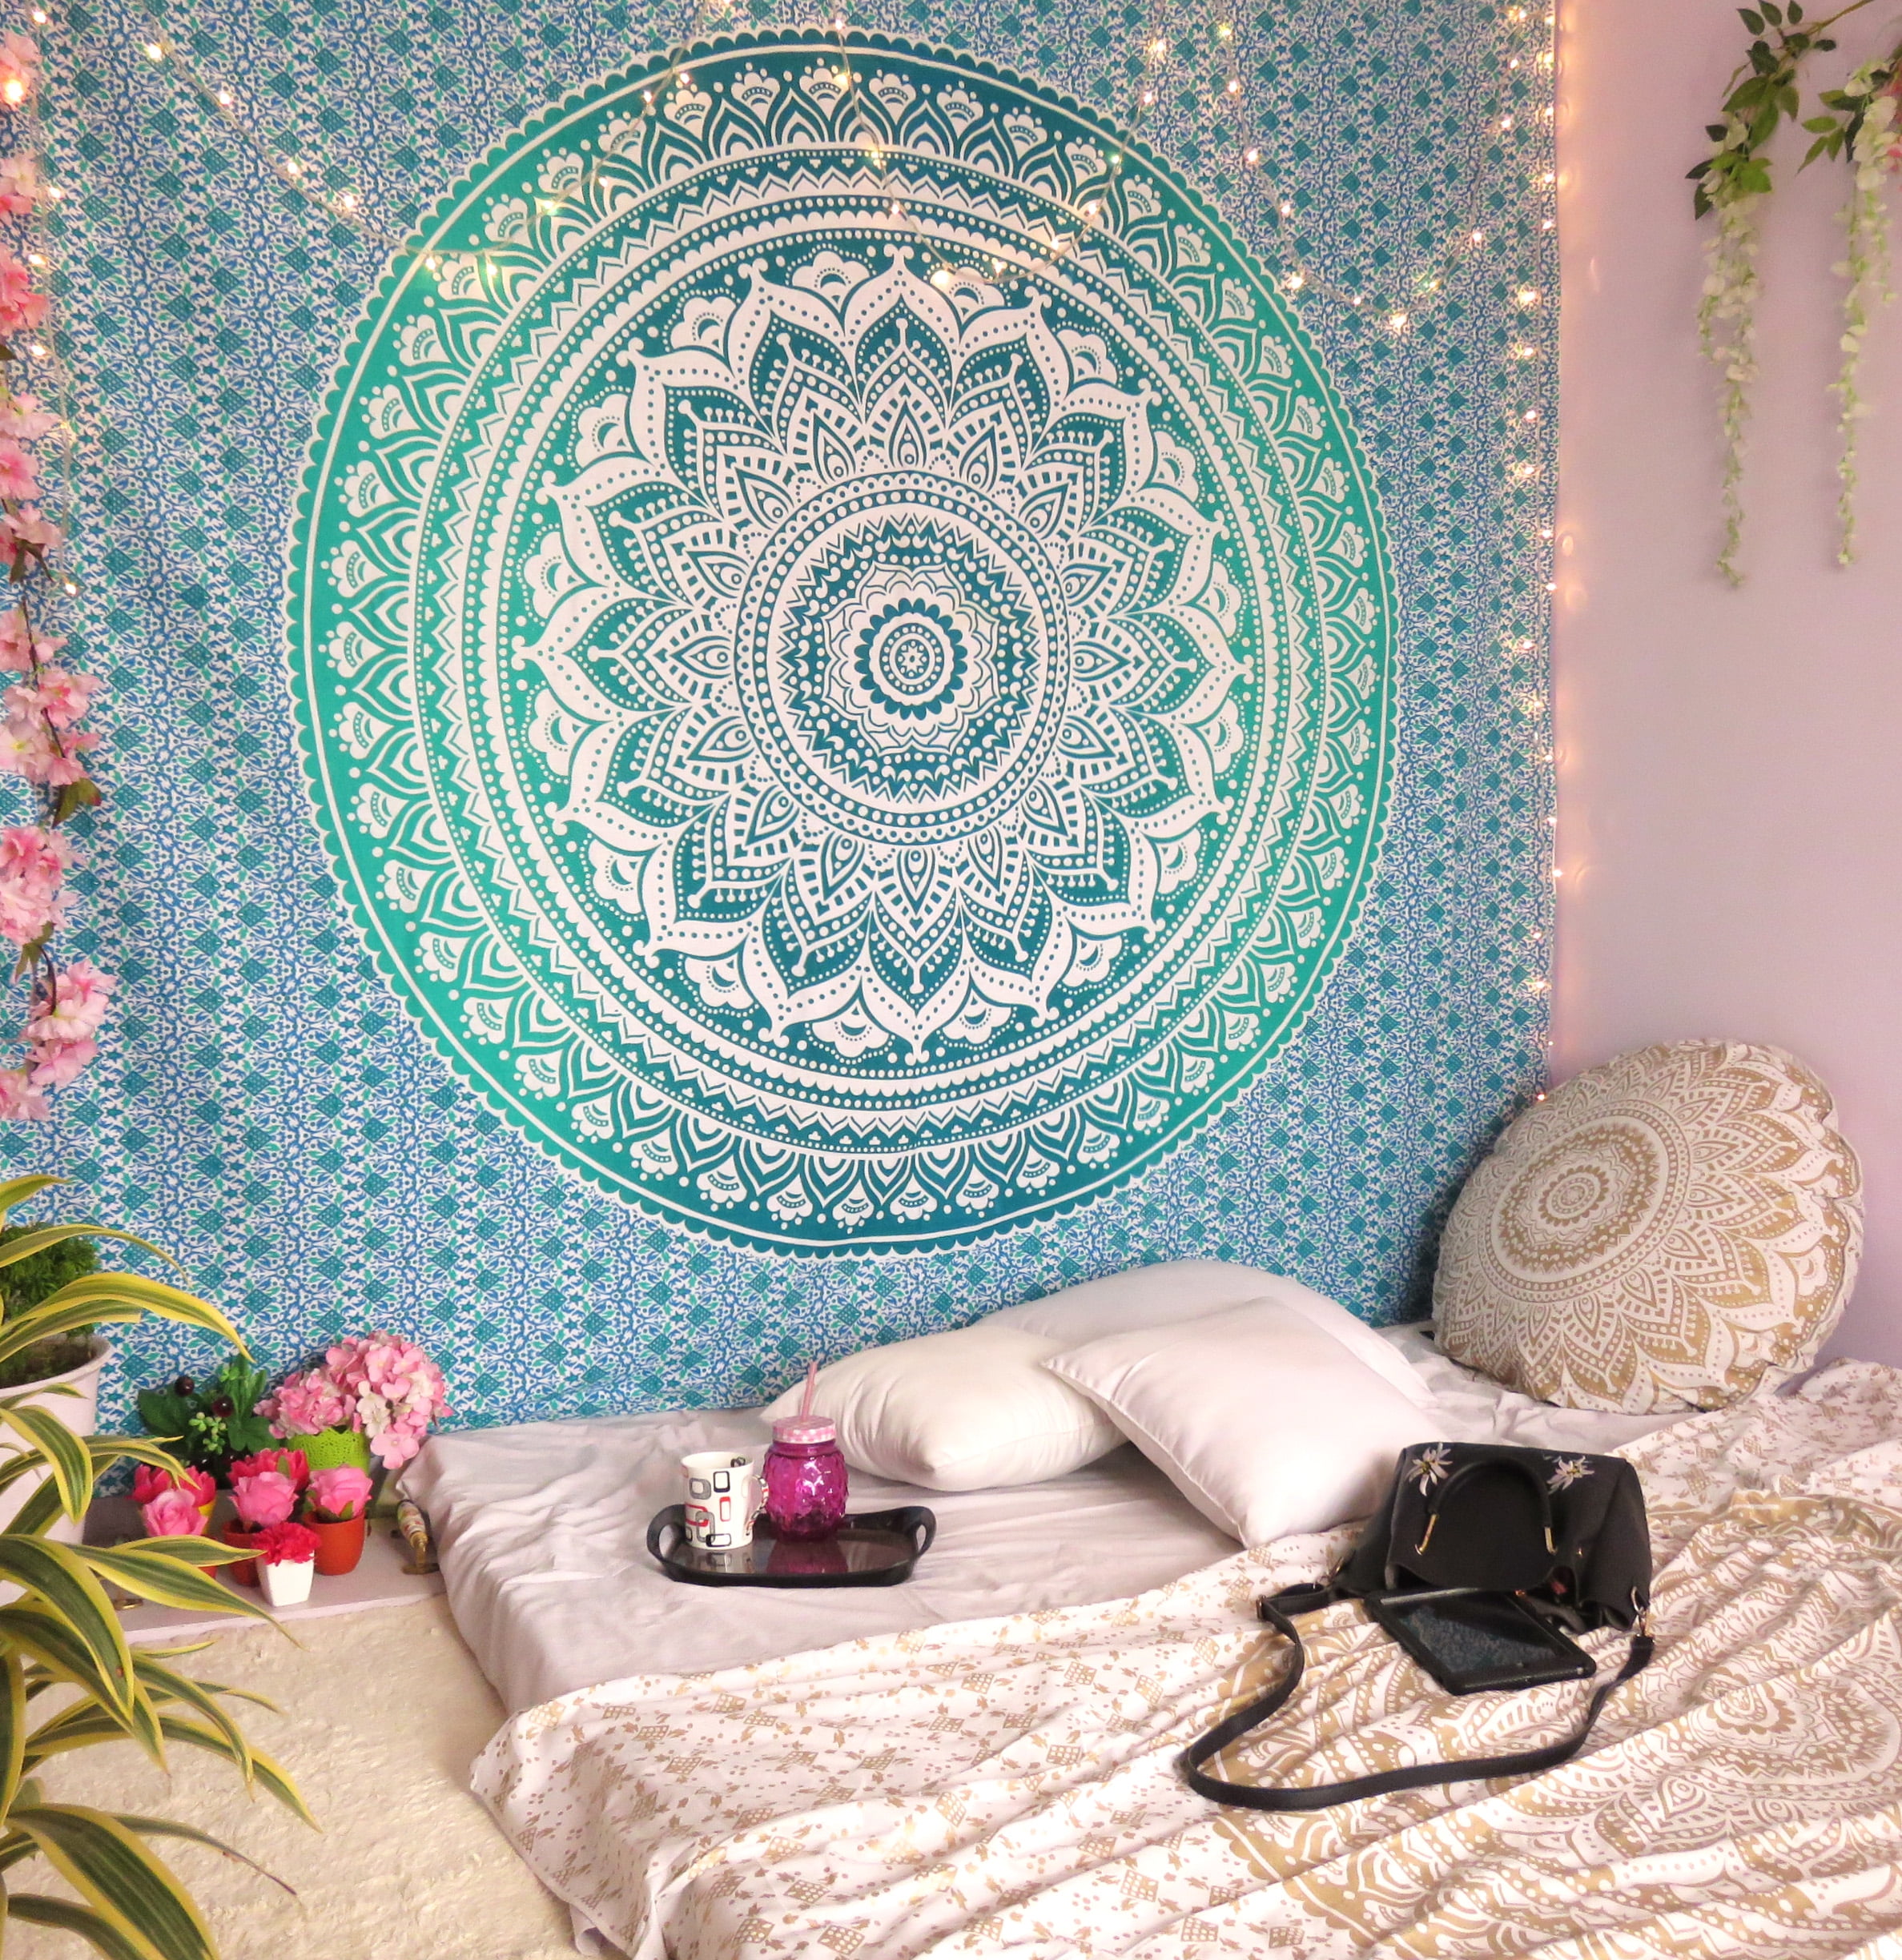 Hippie Indian Mandala Tapestry Wall Hanging Decor Boho Beach Yoga Blanket Mat US 